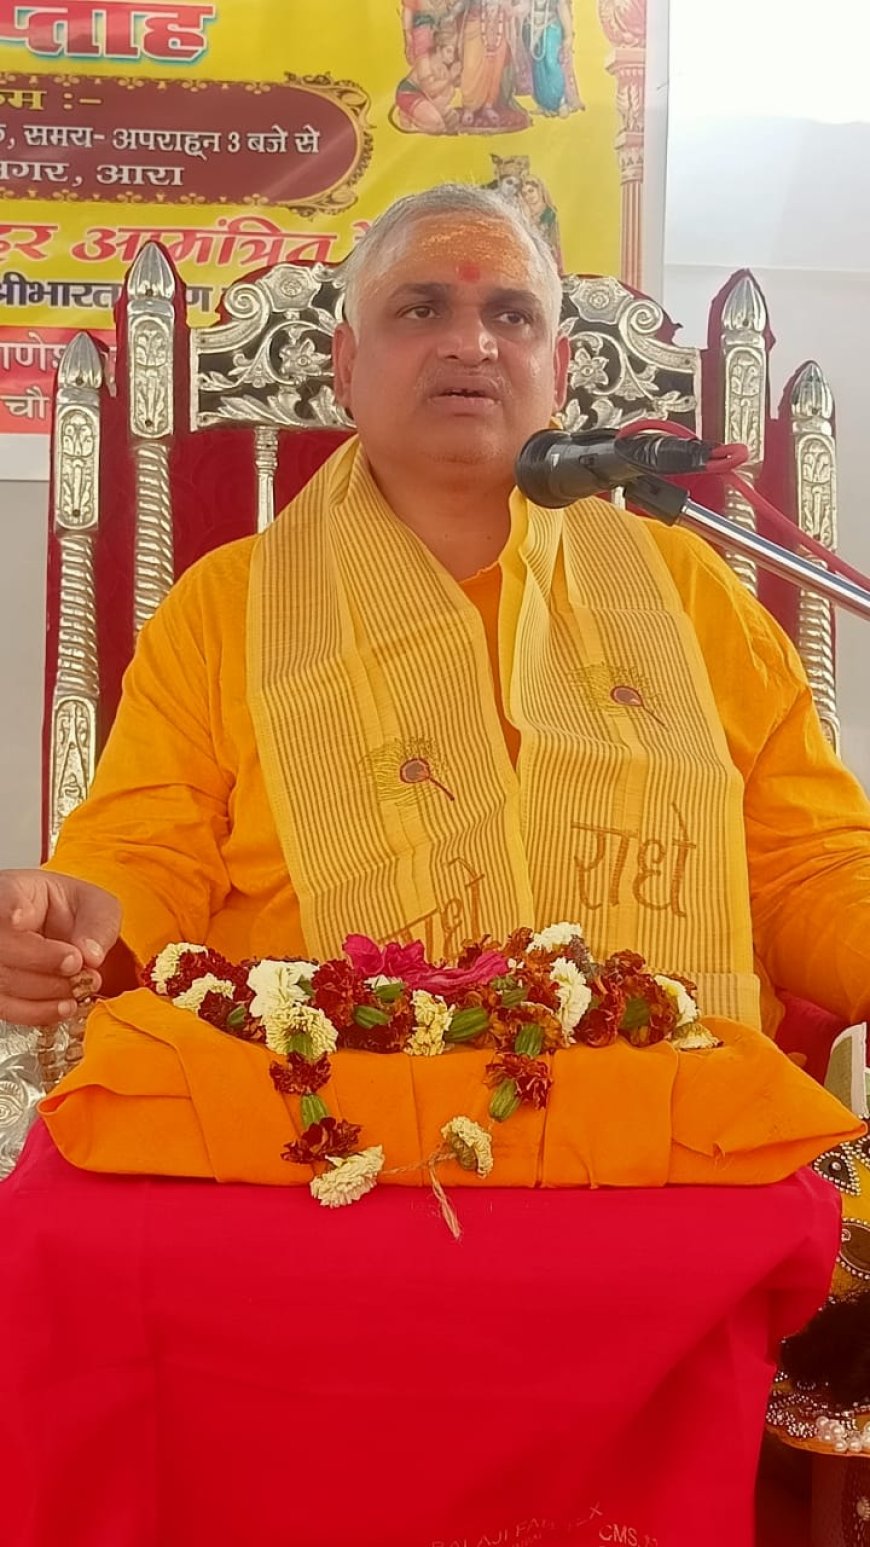 THE UNITY OF SHIVA-VISHNU IS SEEN IN RASLEEL—ACHARYA BHARAT BHUSHAN PANDEY